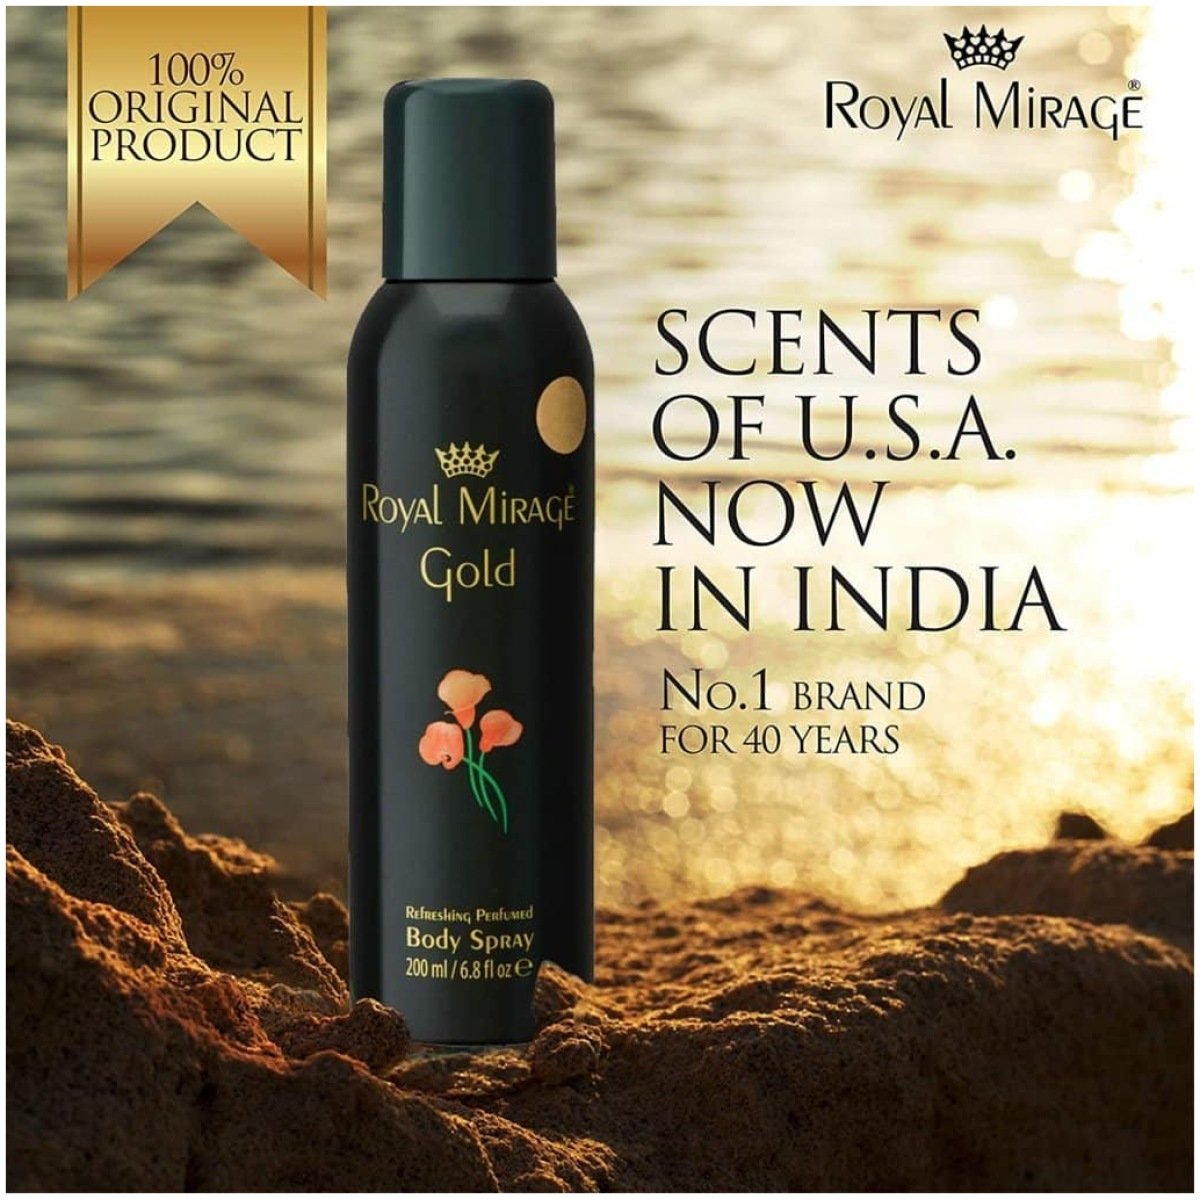 Royal Mirage Gold Perfumed Body Deodorant Spray 200ml